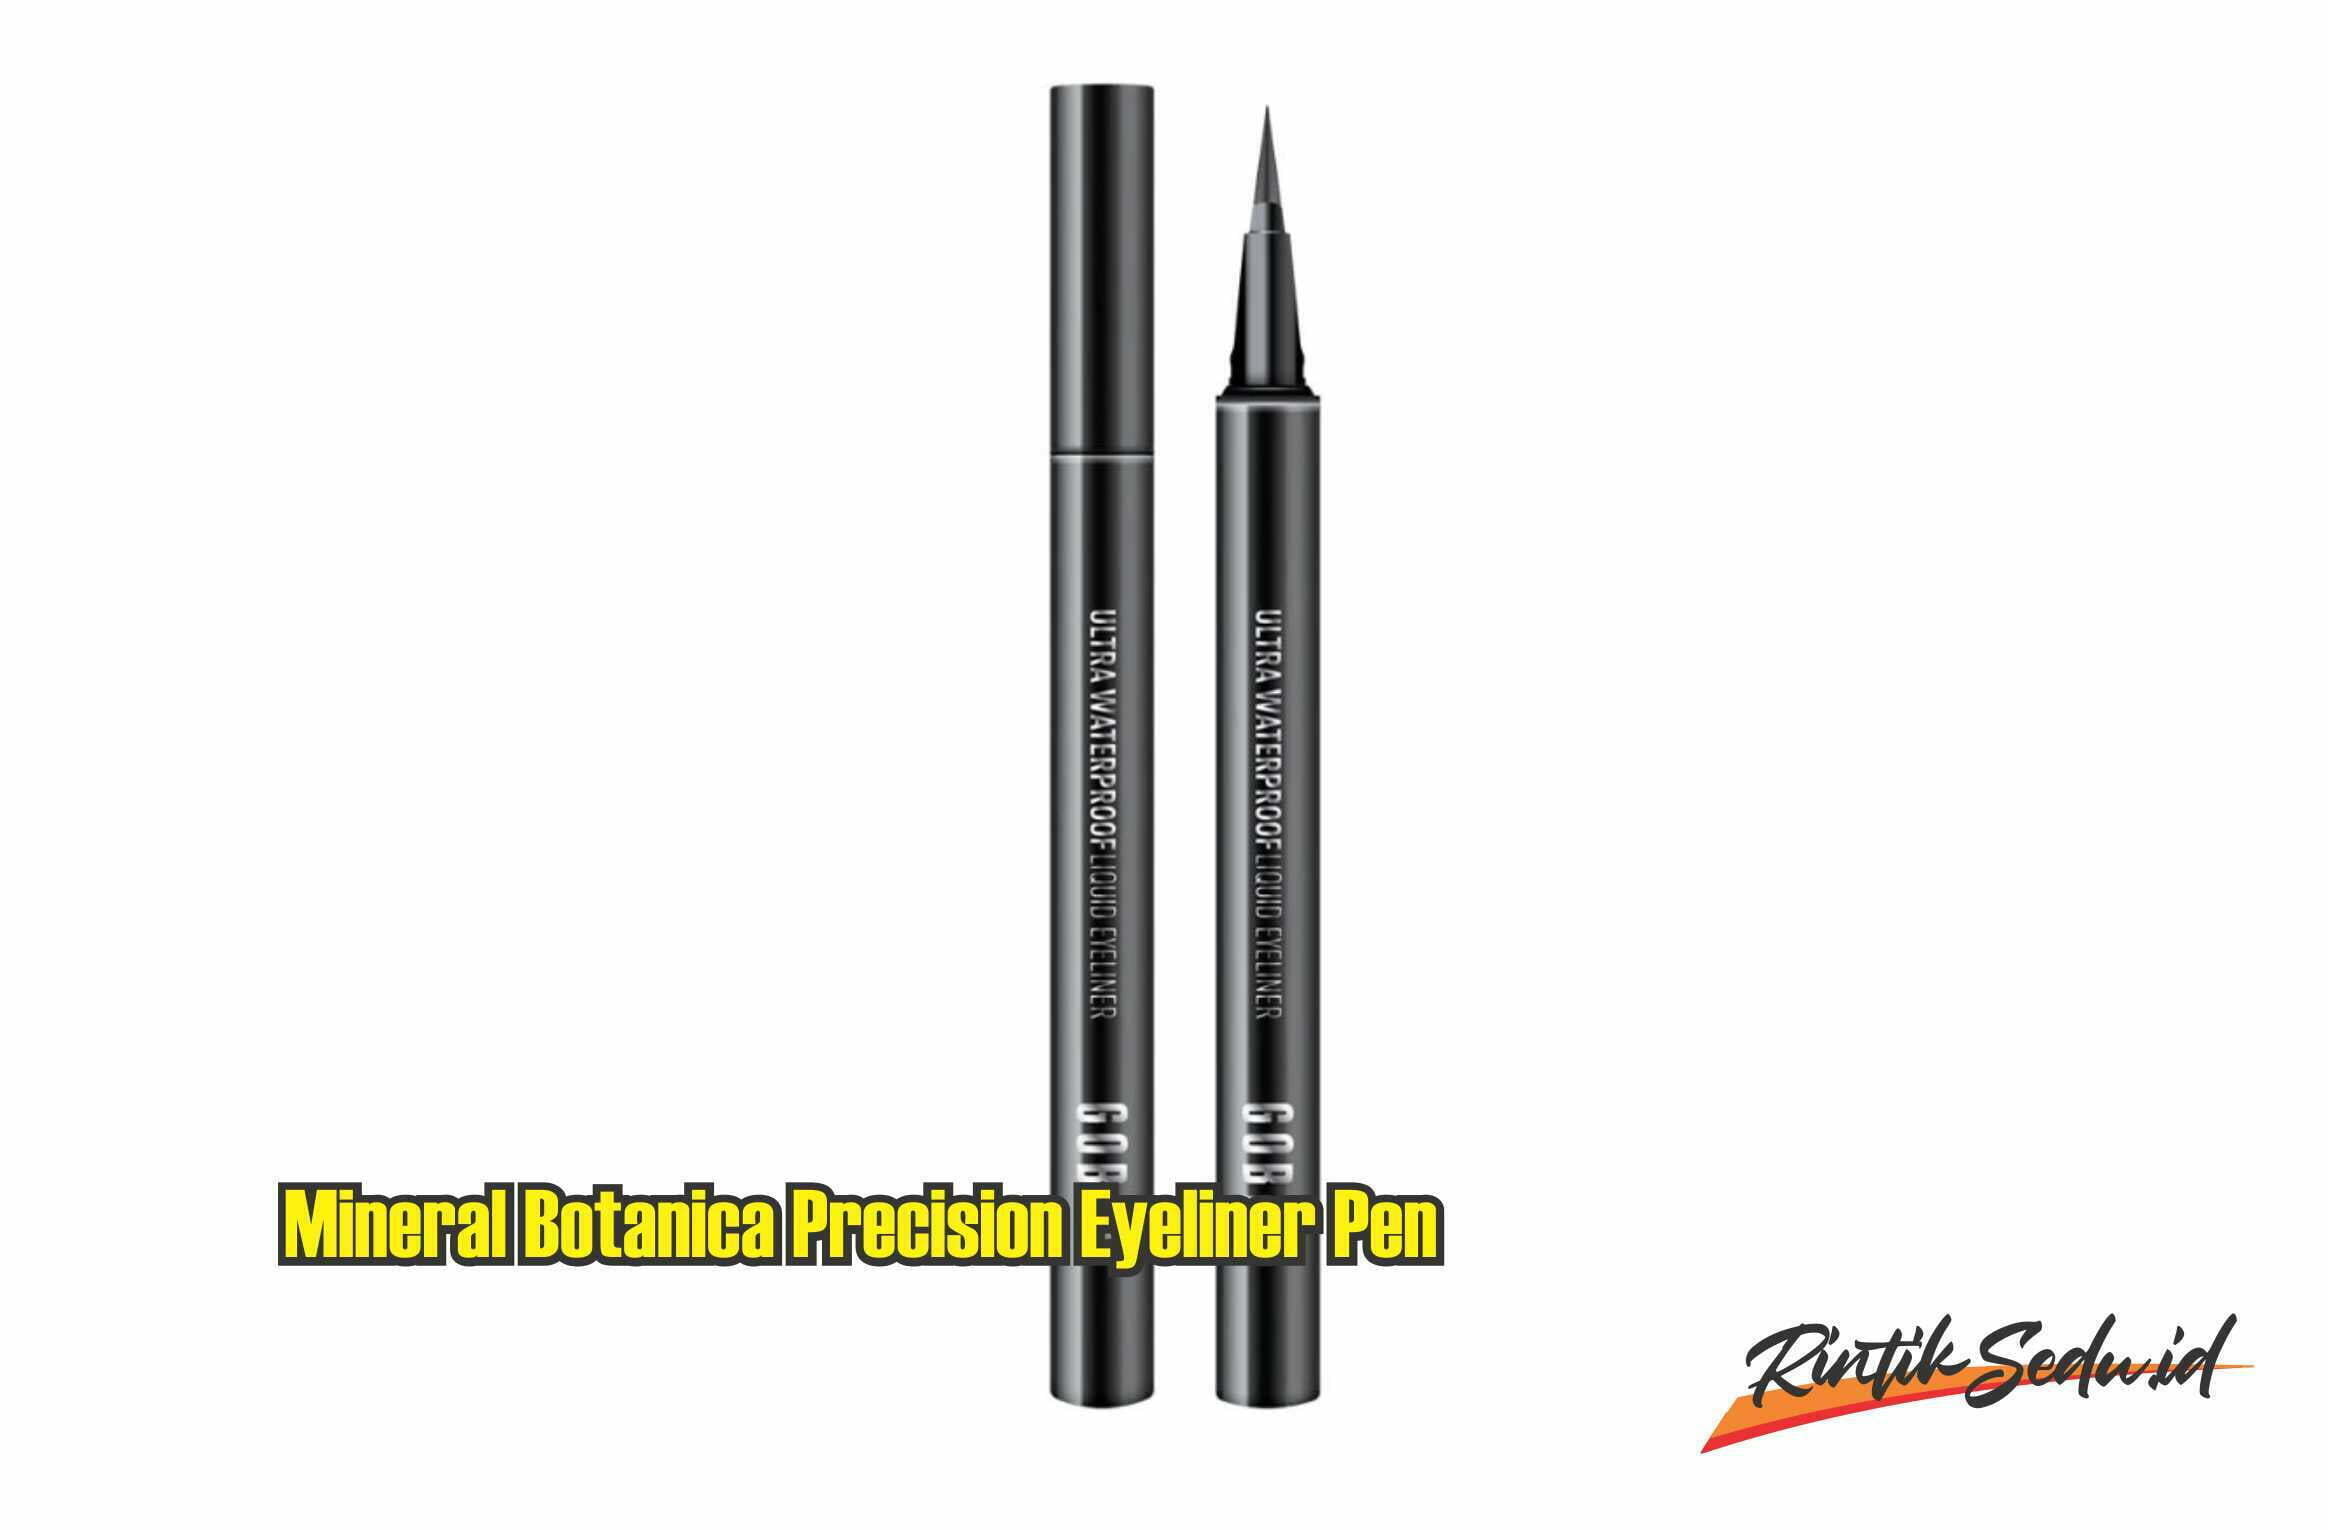 Mineral Botanica Precision Eyeliner Pen